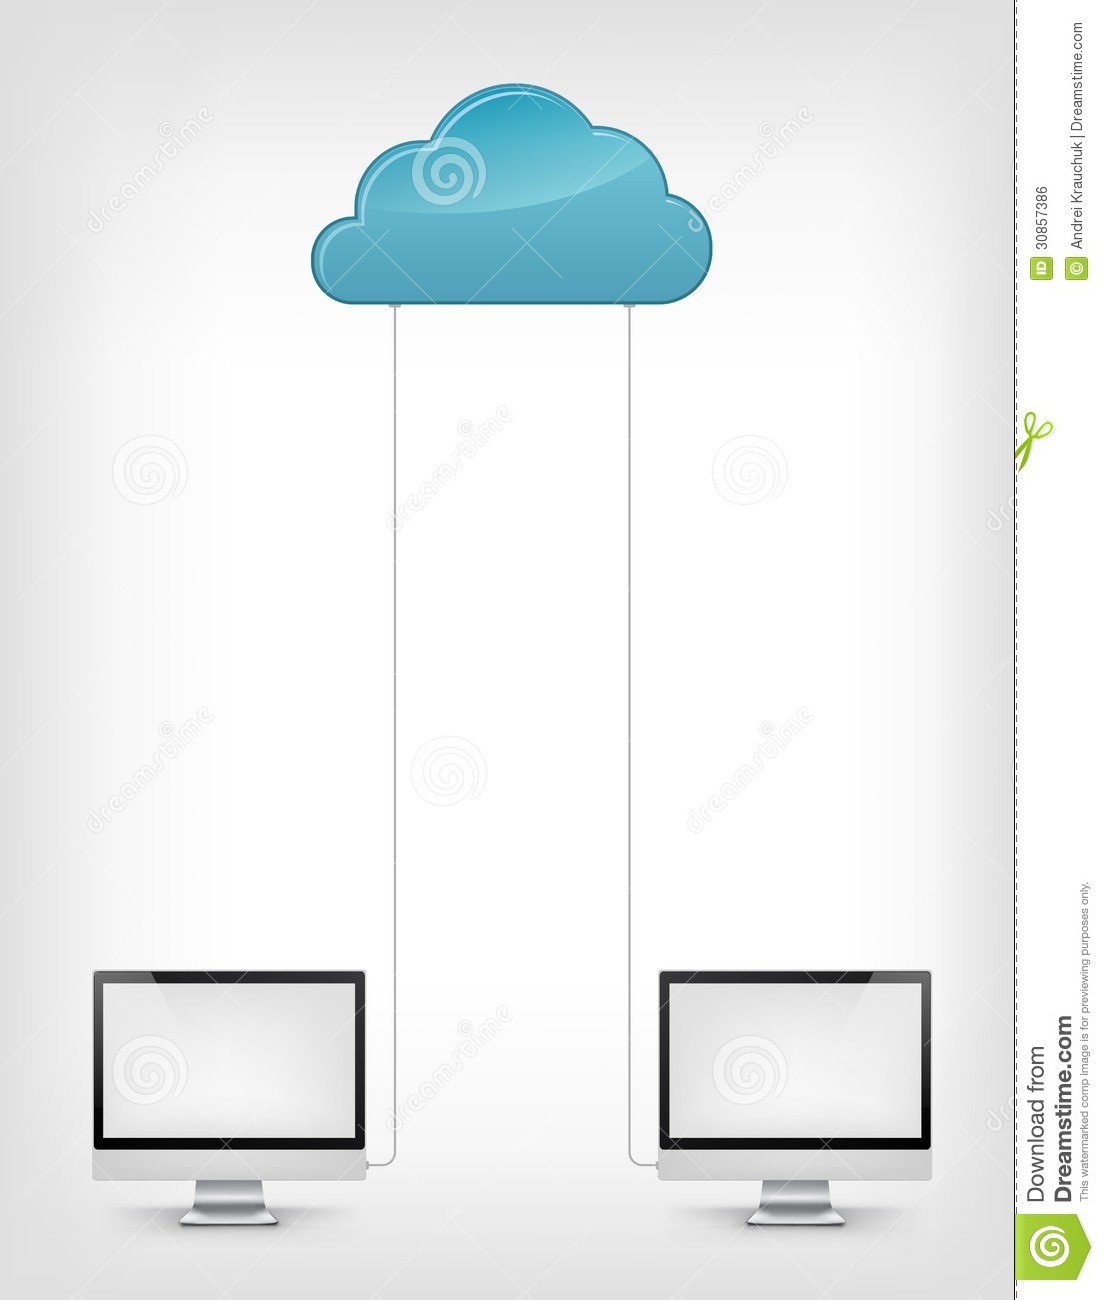 Free Cloud Services